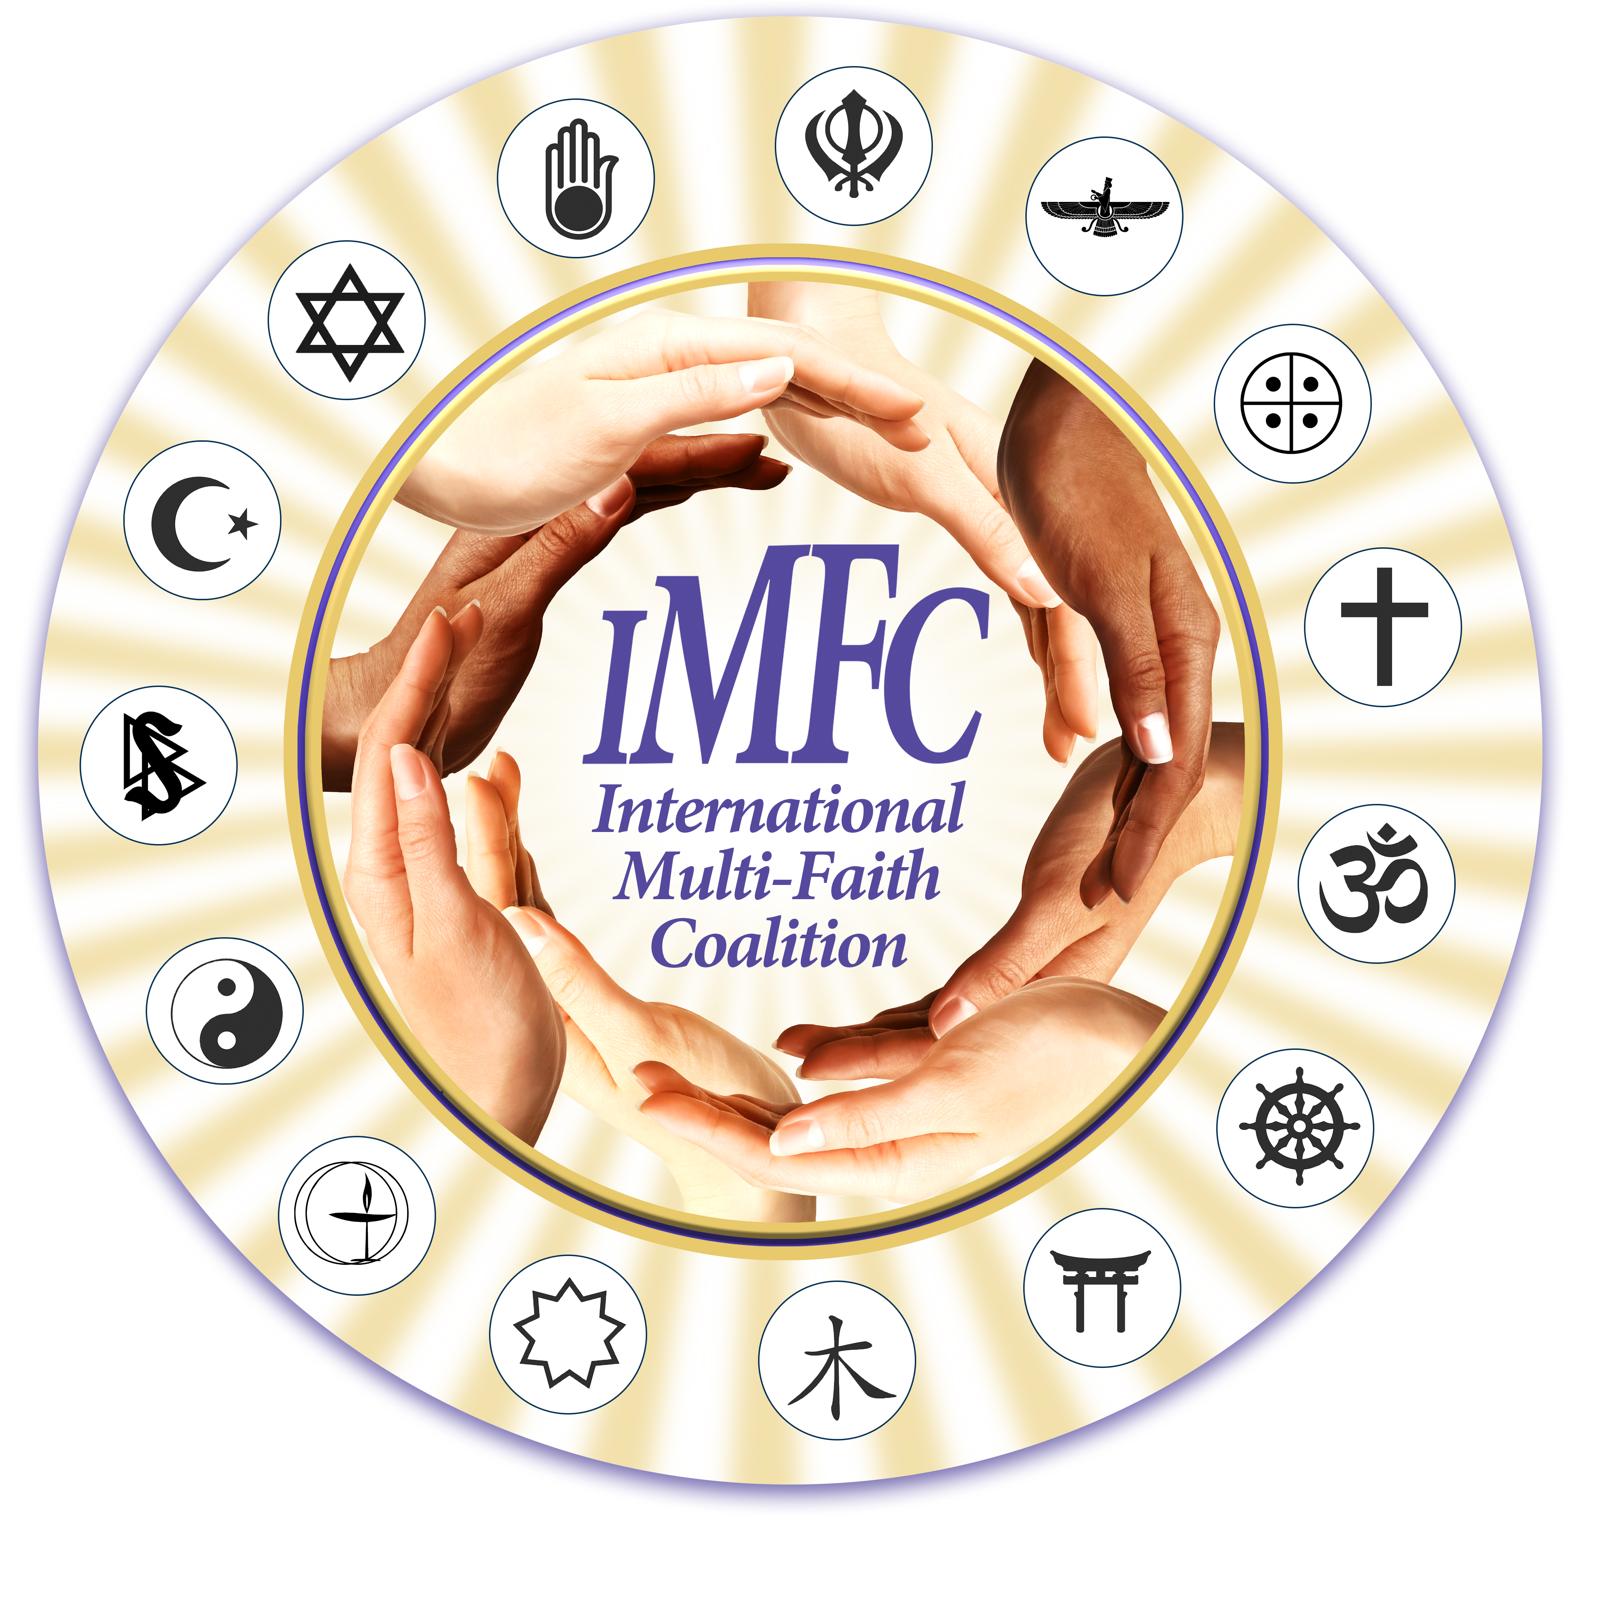 International Multi-Faith Coalition